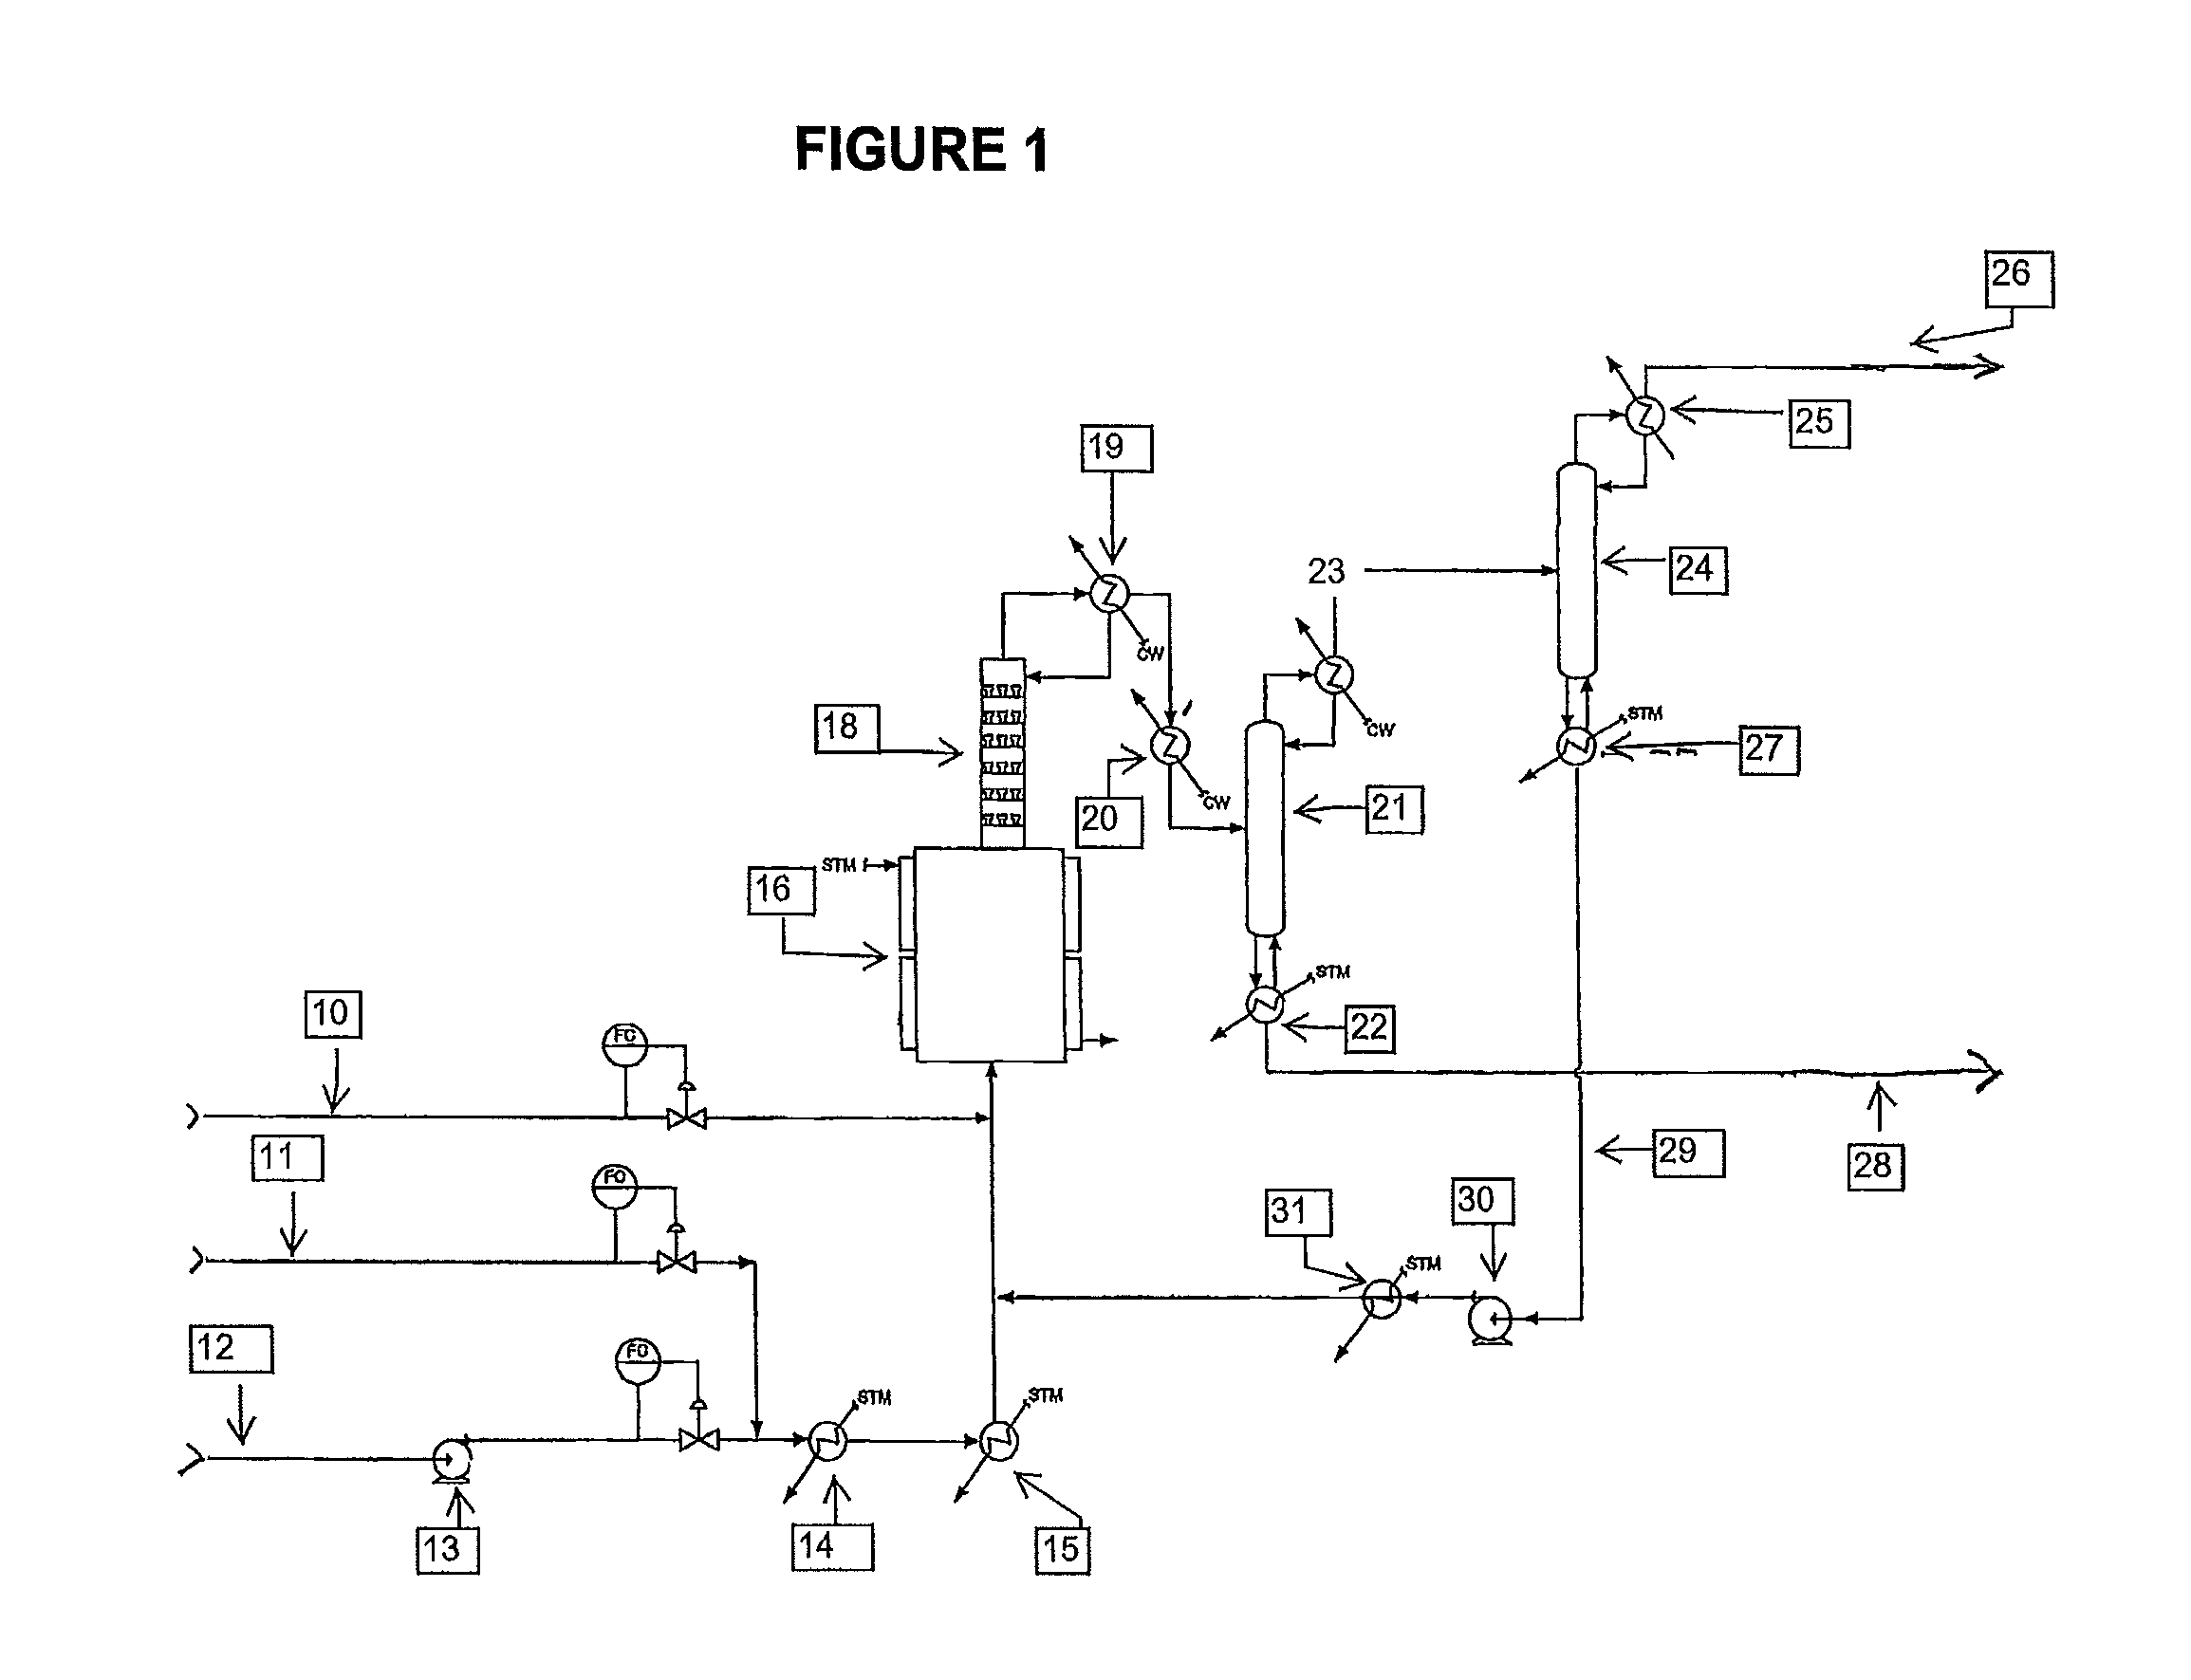 Process to manufacture 2-chloro-1,1,1,2-tetrafluoropropane (HCFC-244bb)